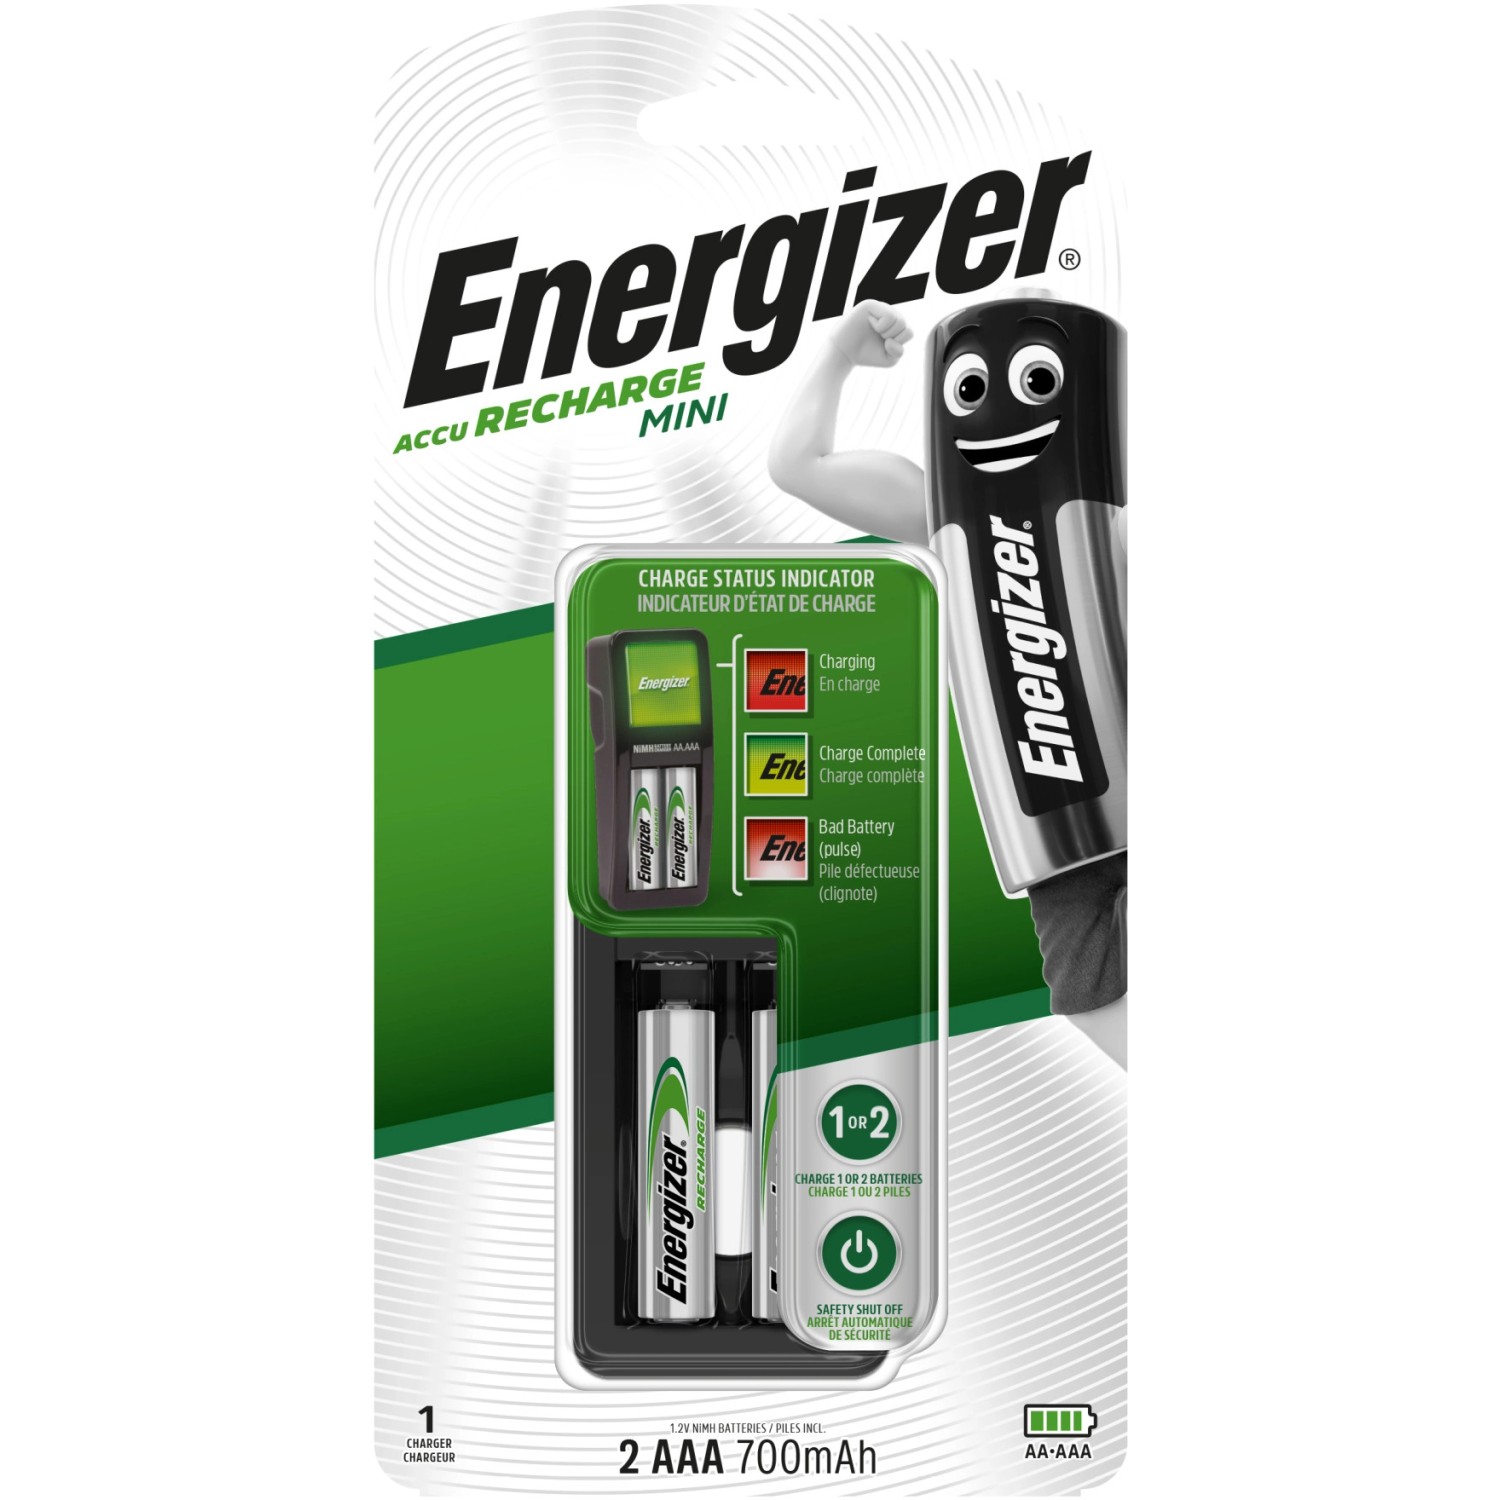 Energizer Mini Batterieladegerät